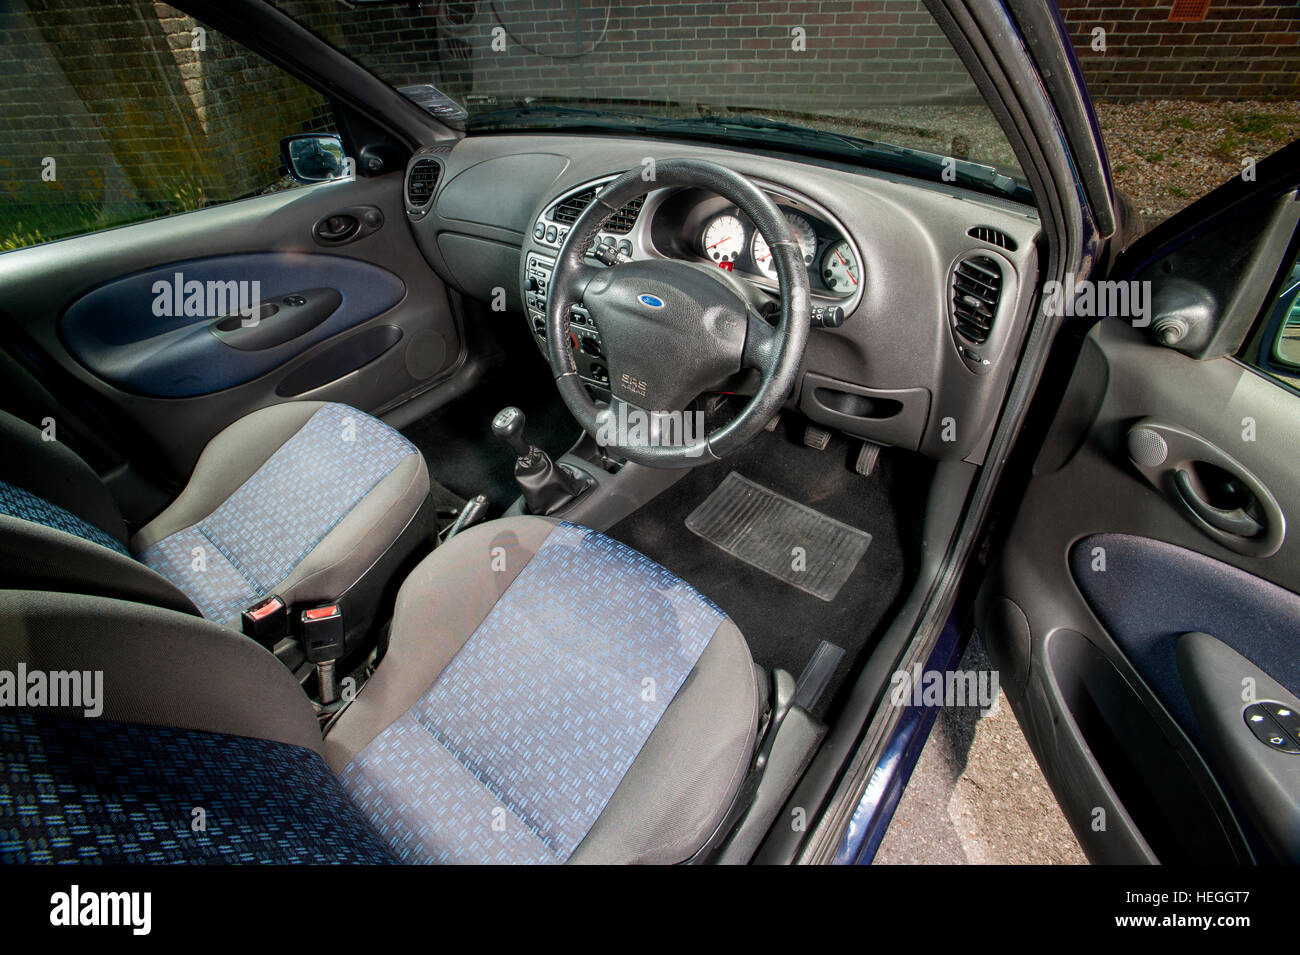 2002 Mk5 Ford Fiesta Small Hatchback Car Interior Stock